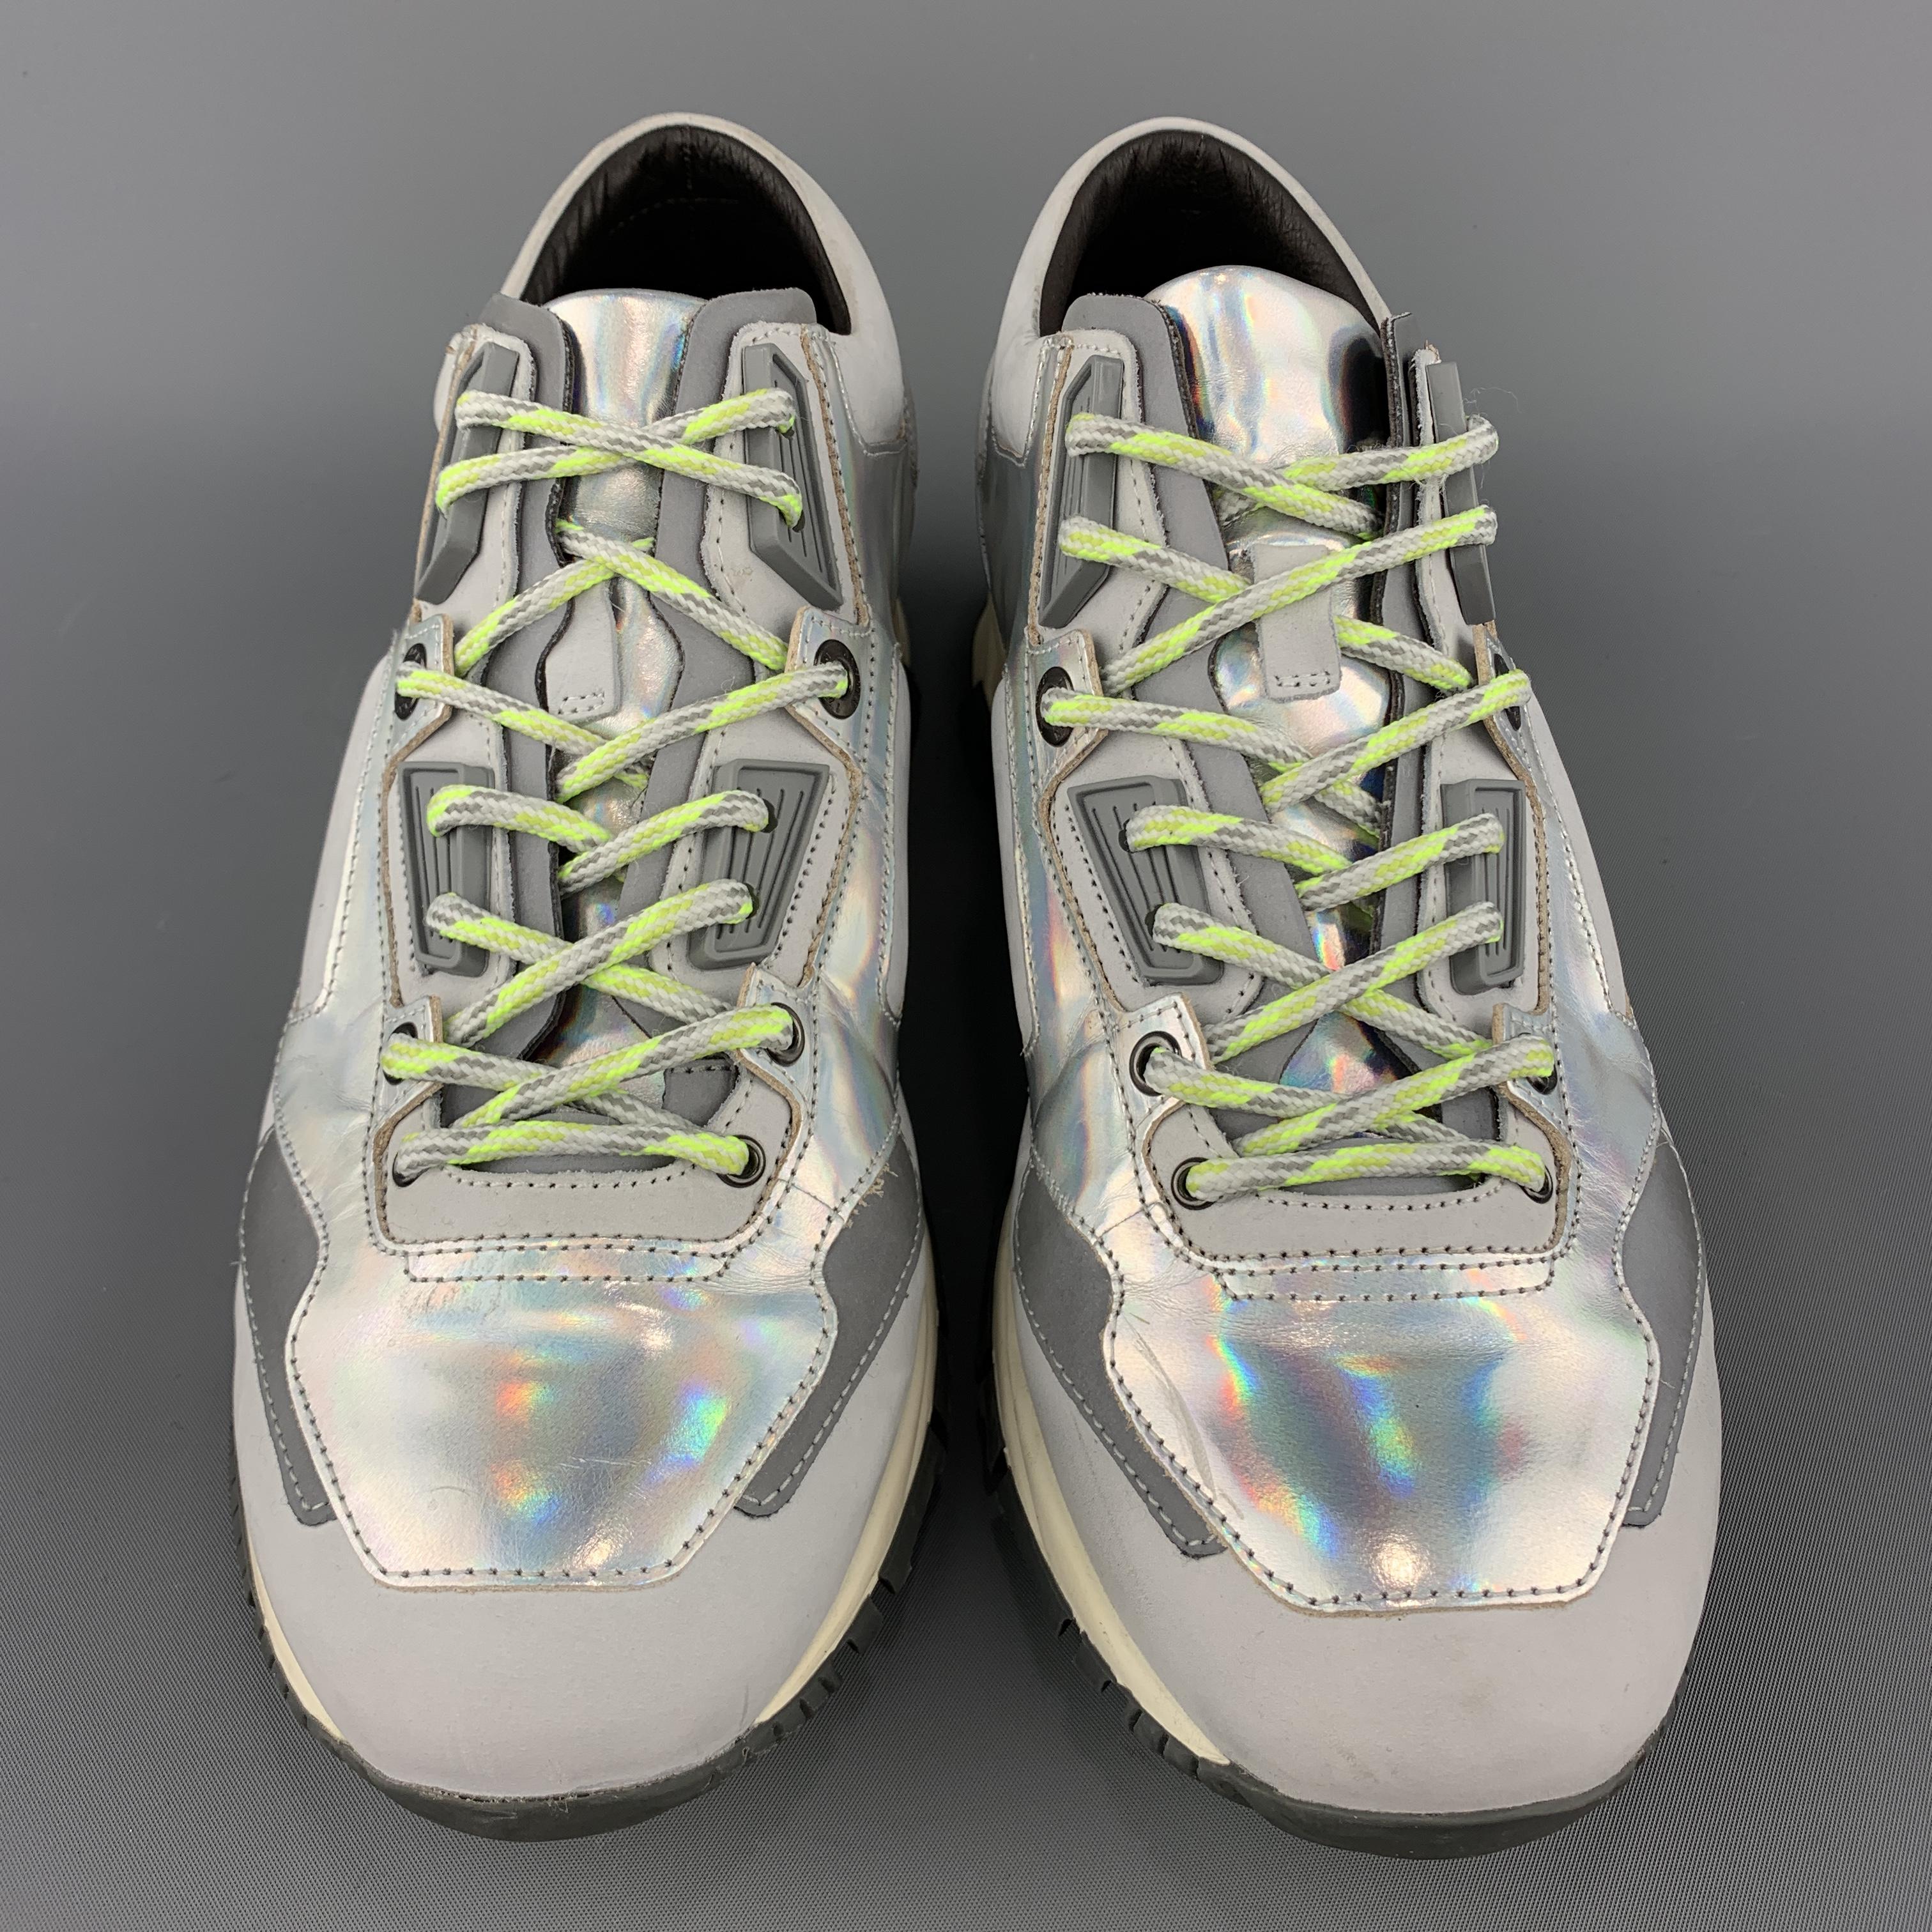 lanvin reflective sneakers